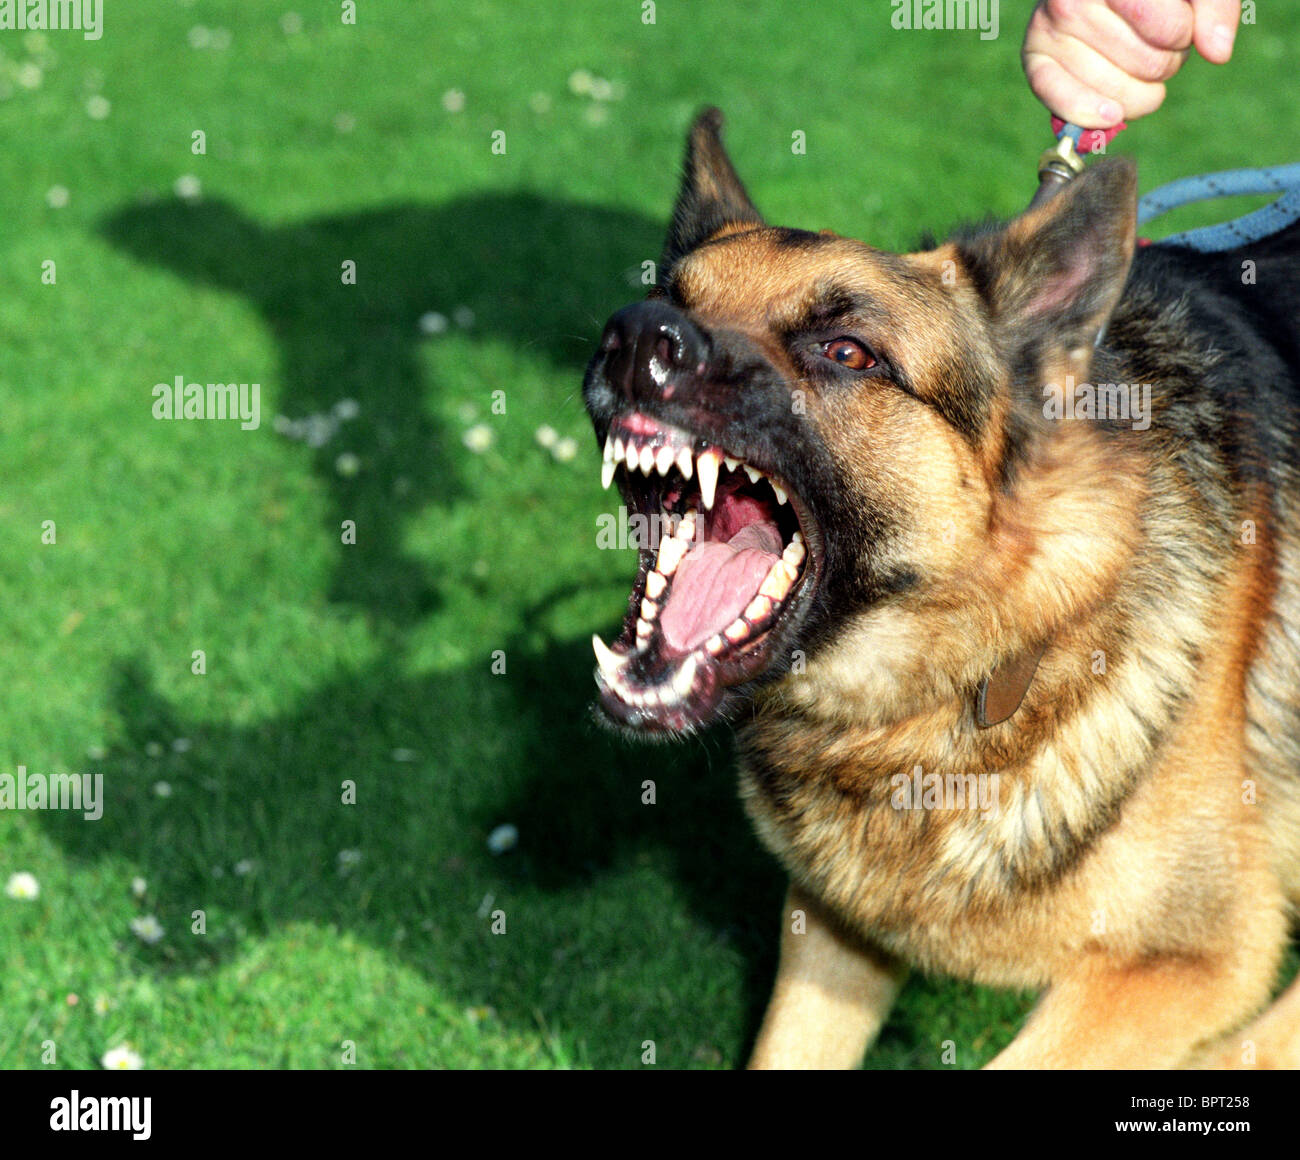 Guard dog,  Alsation, aggressive dog, Alsation guard dog barking and straining at the leash Stock Photo